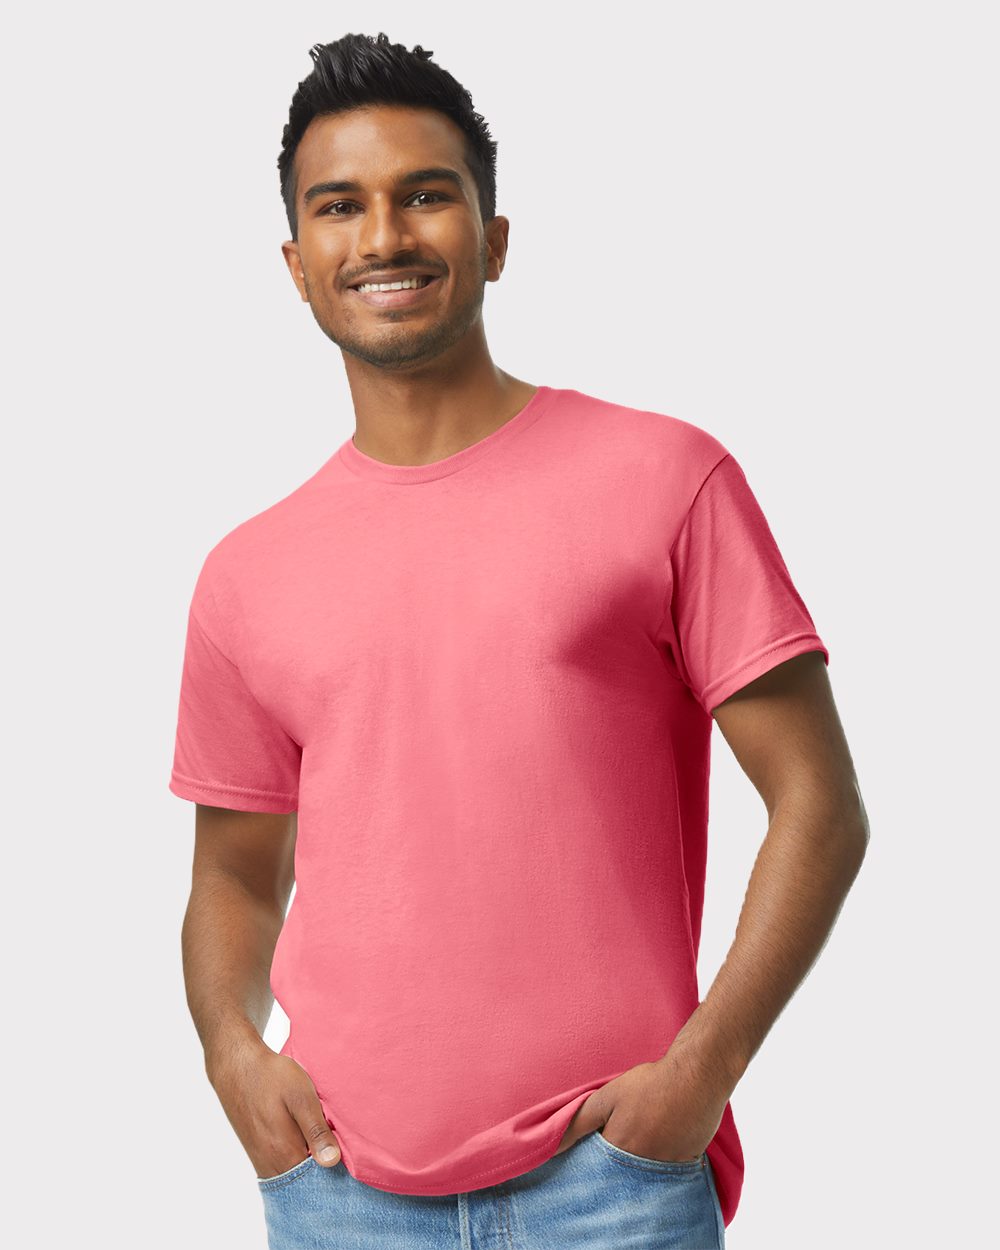 Men's T-Shirt Short Sleeve - Dallas - image 5 of 5